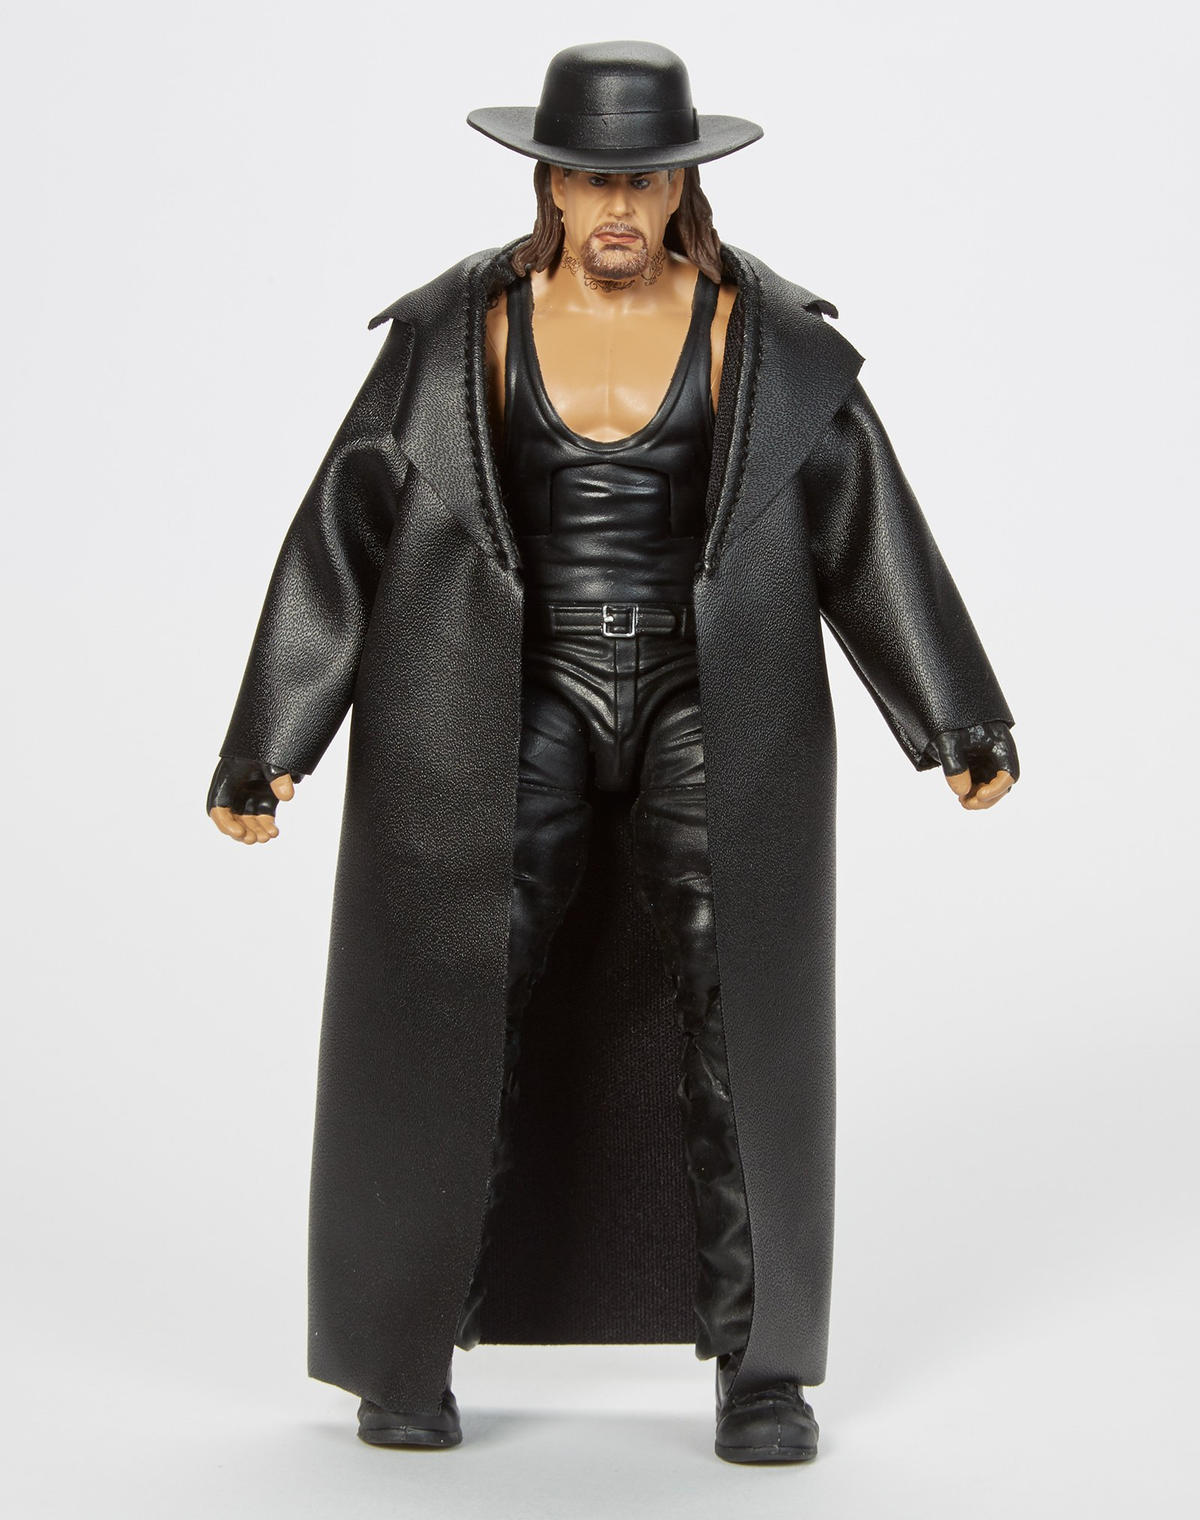 2019 WWE Mattel Elite Collection WrestleMania 35 Undertaker